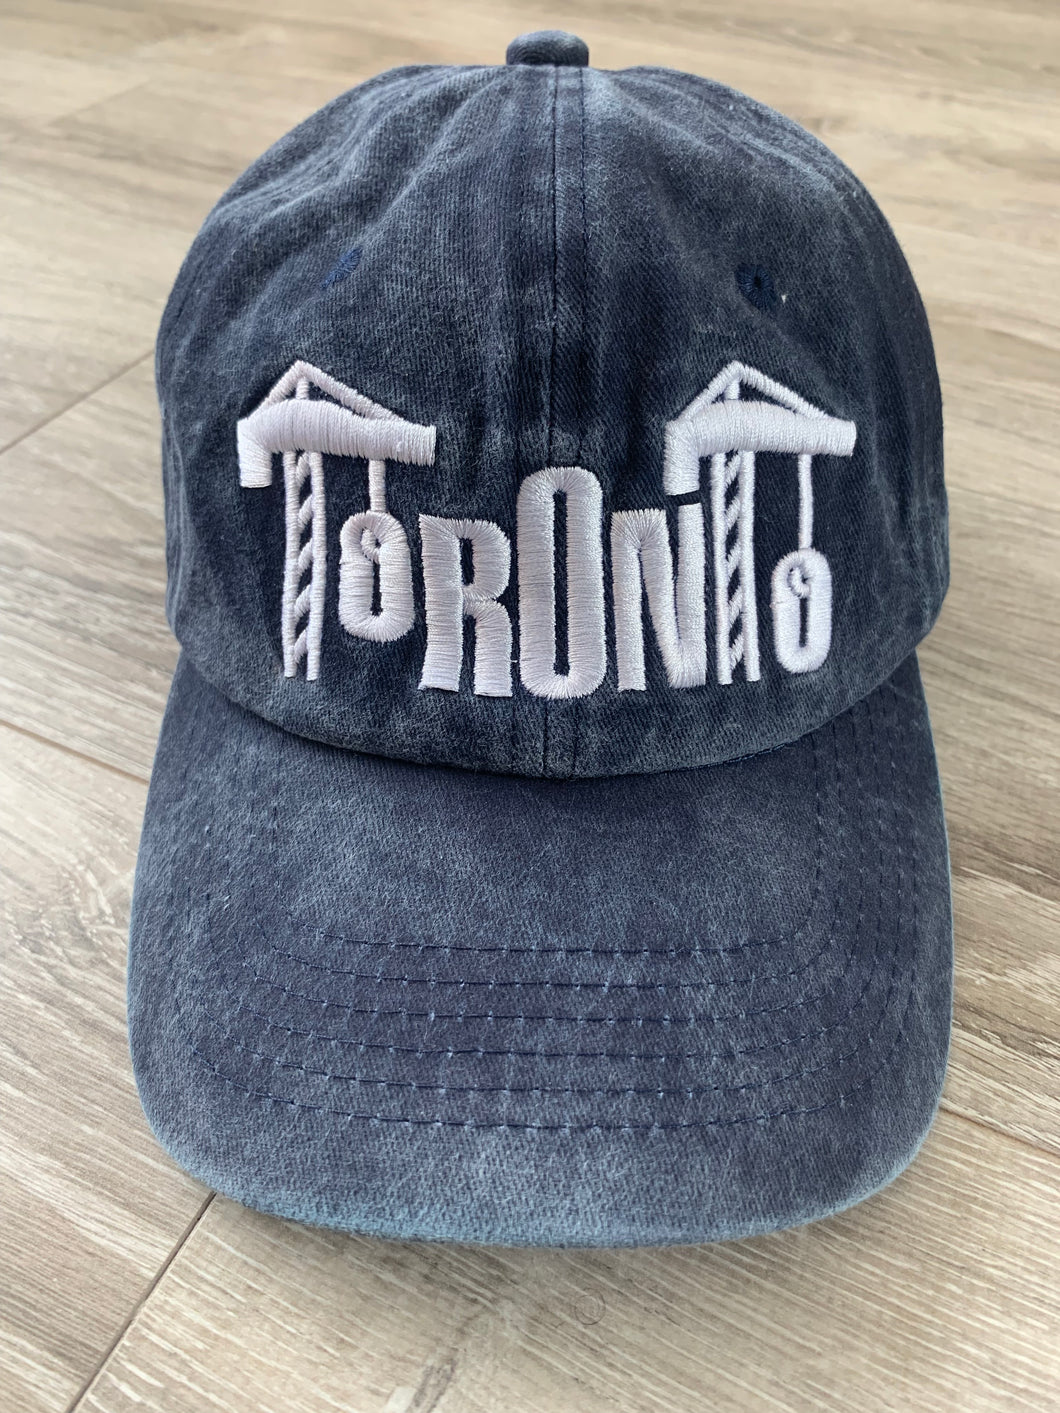 Toronto Underconstruction Hats